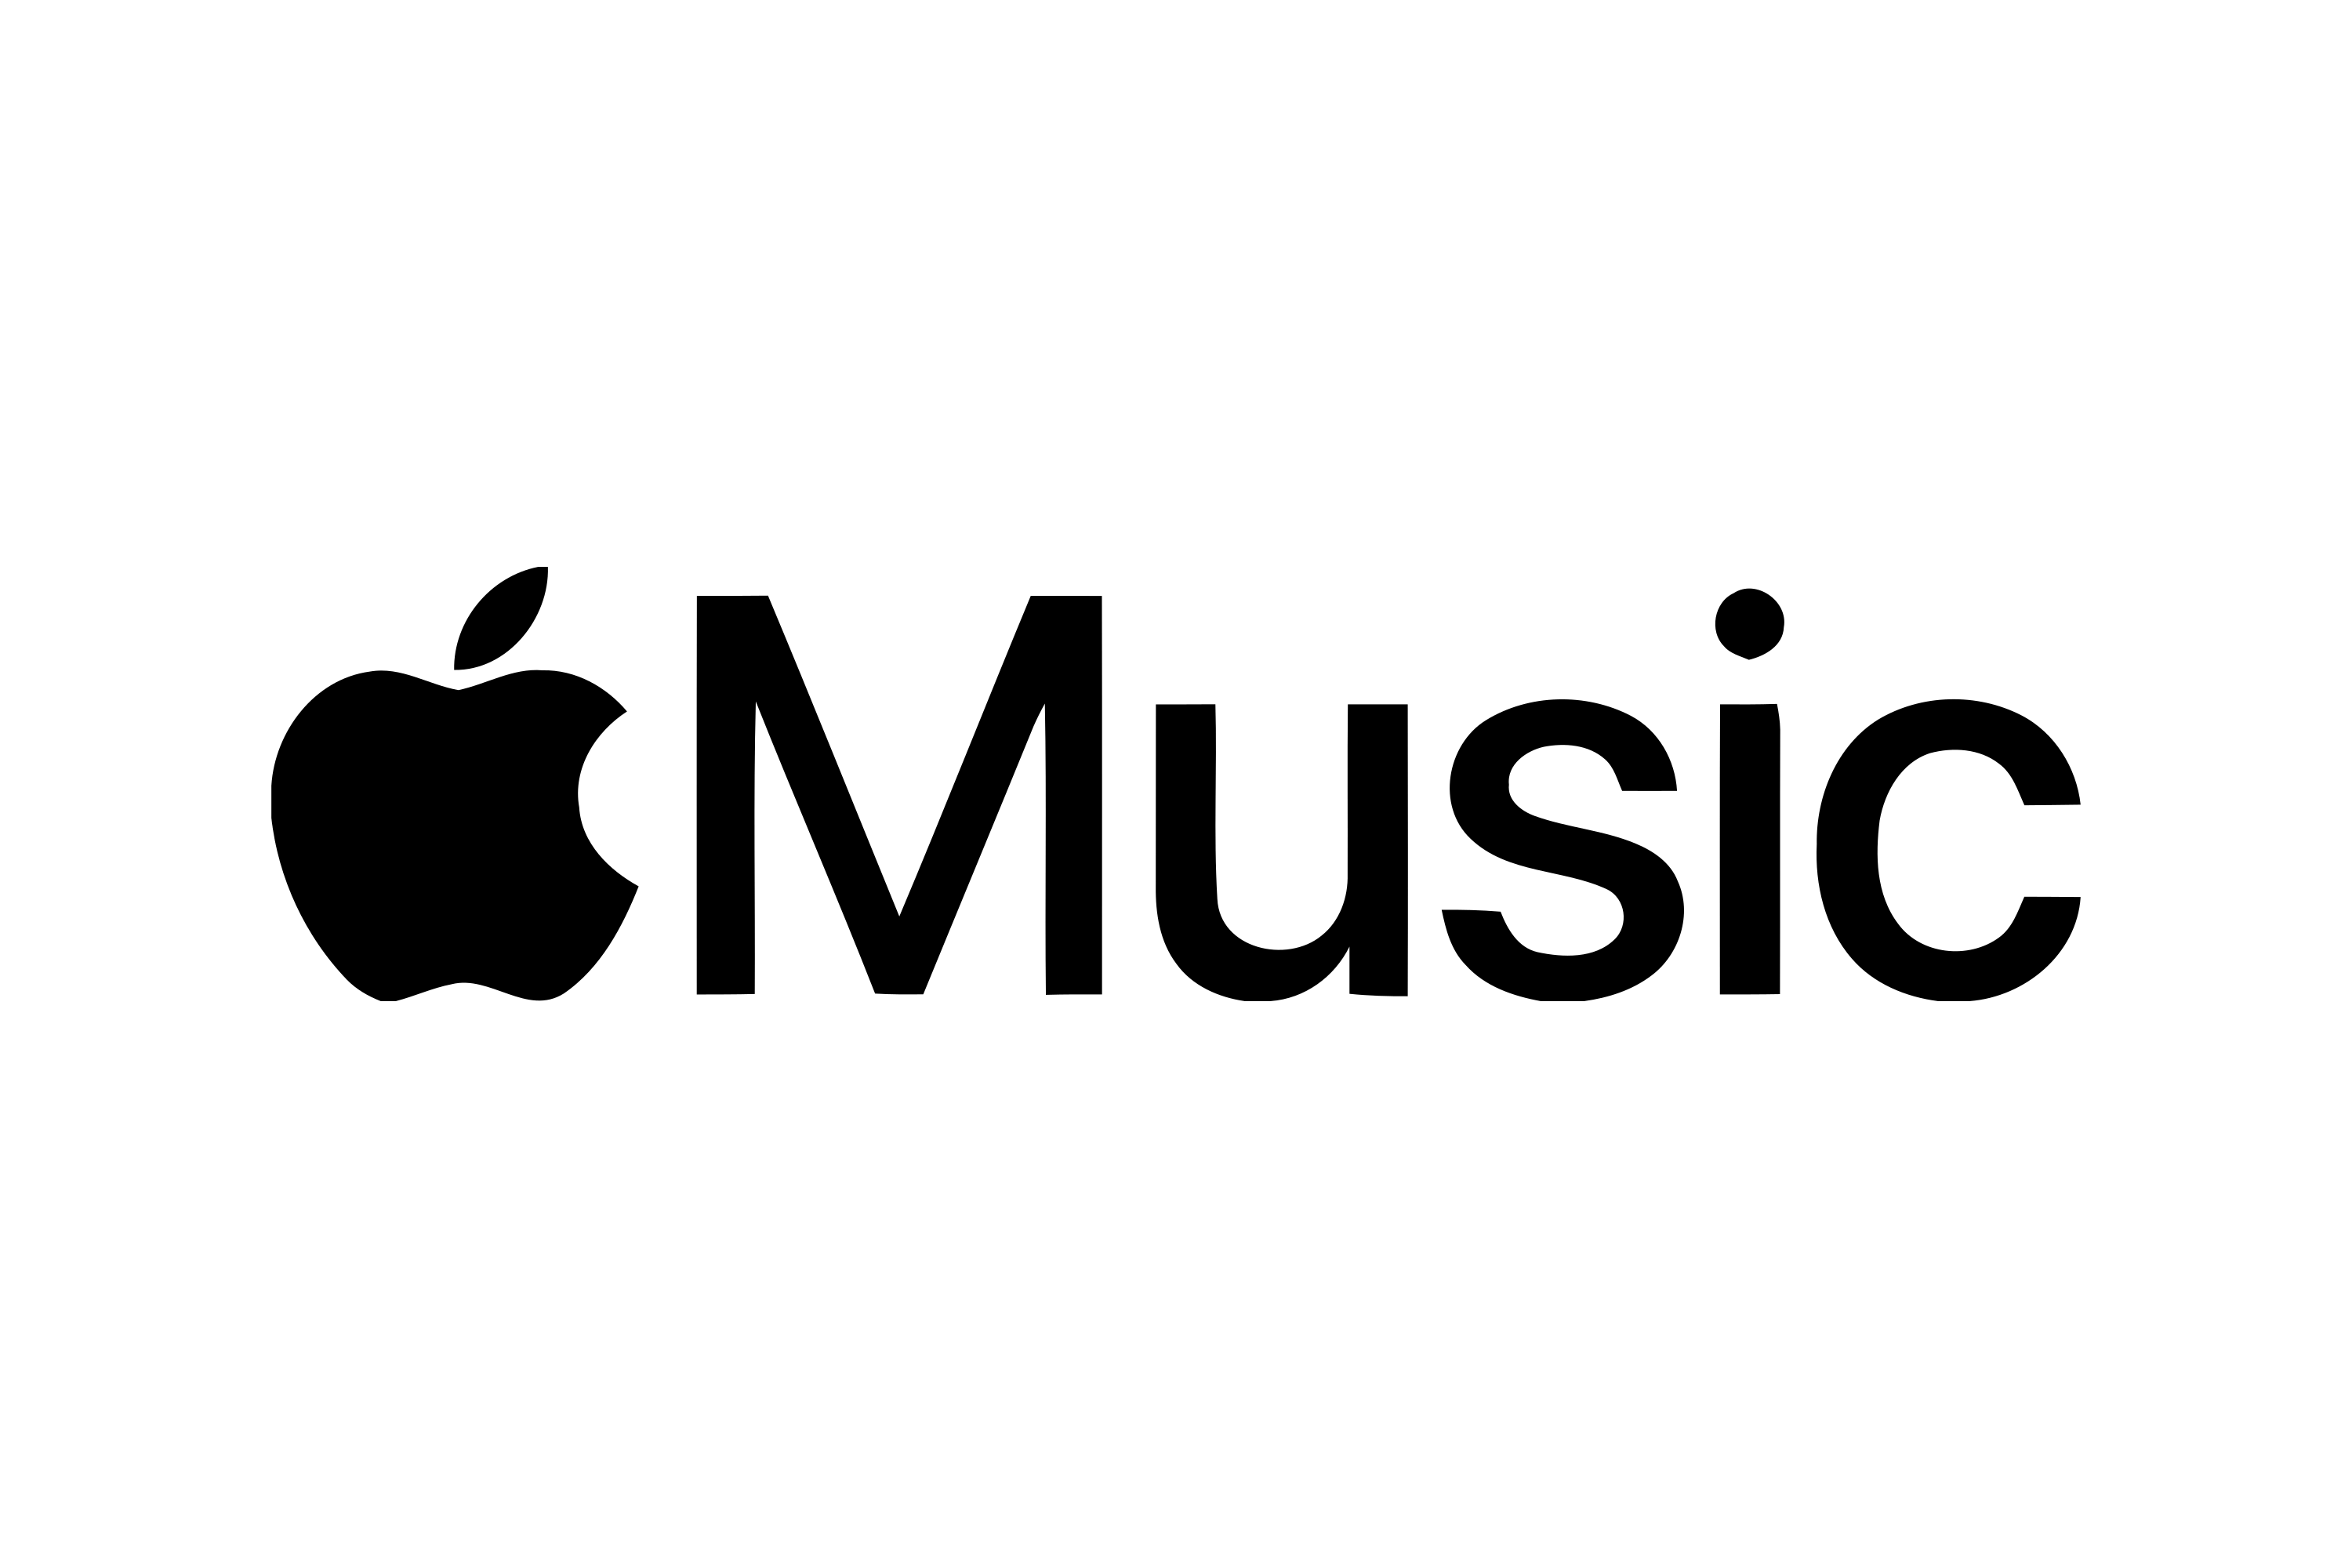 Download Apple Music Logo in SVG Vector or PNG File Format - Logo.wine